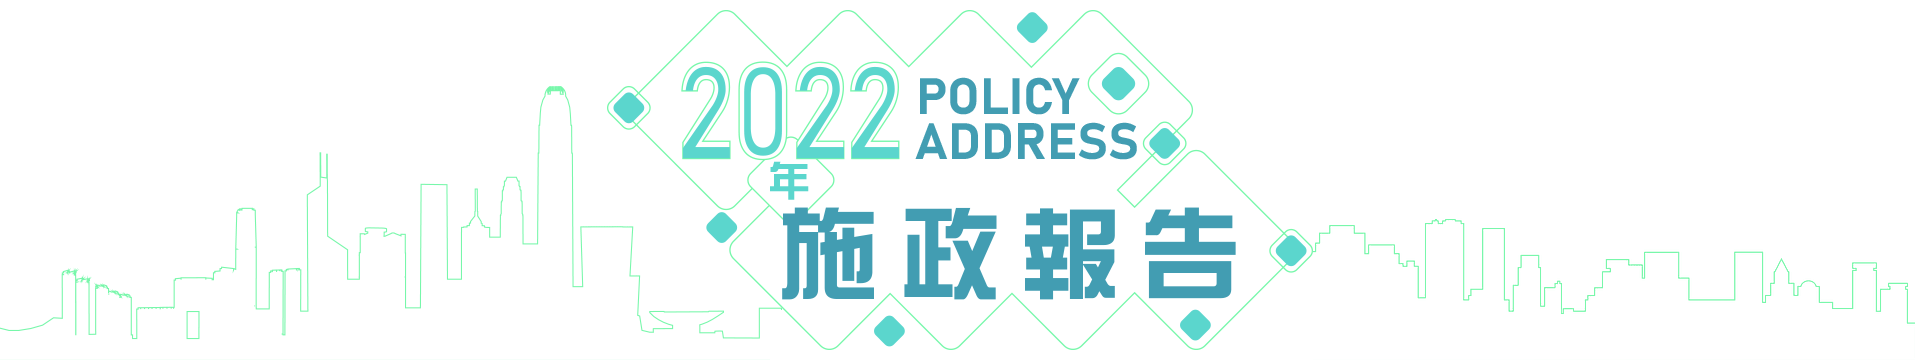 2022年 施政报告 Policy Address 